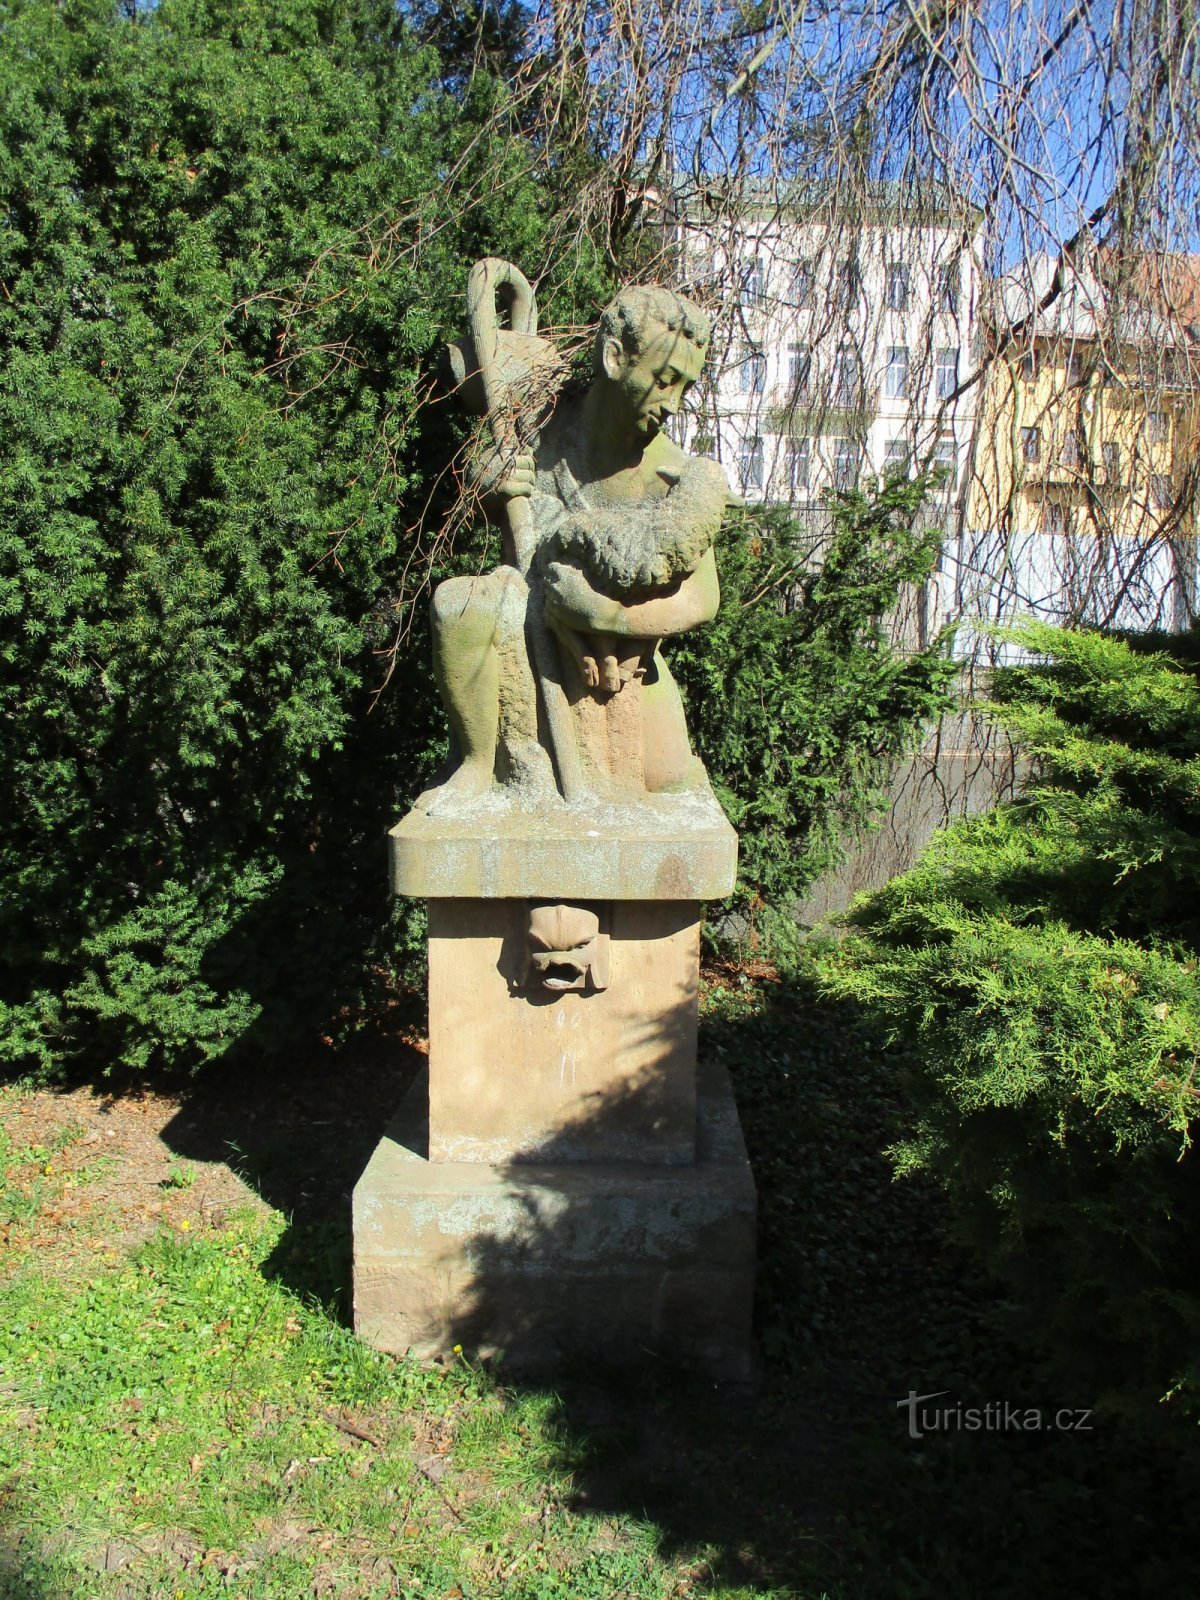 Statue af hyrden i Masaryk Gardens (Jaroměř, 22.4.2020/XNUMX/XNUMX)